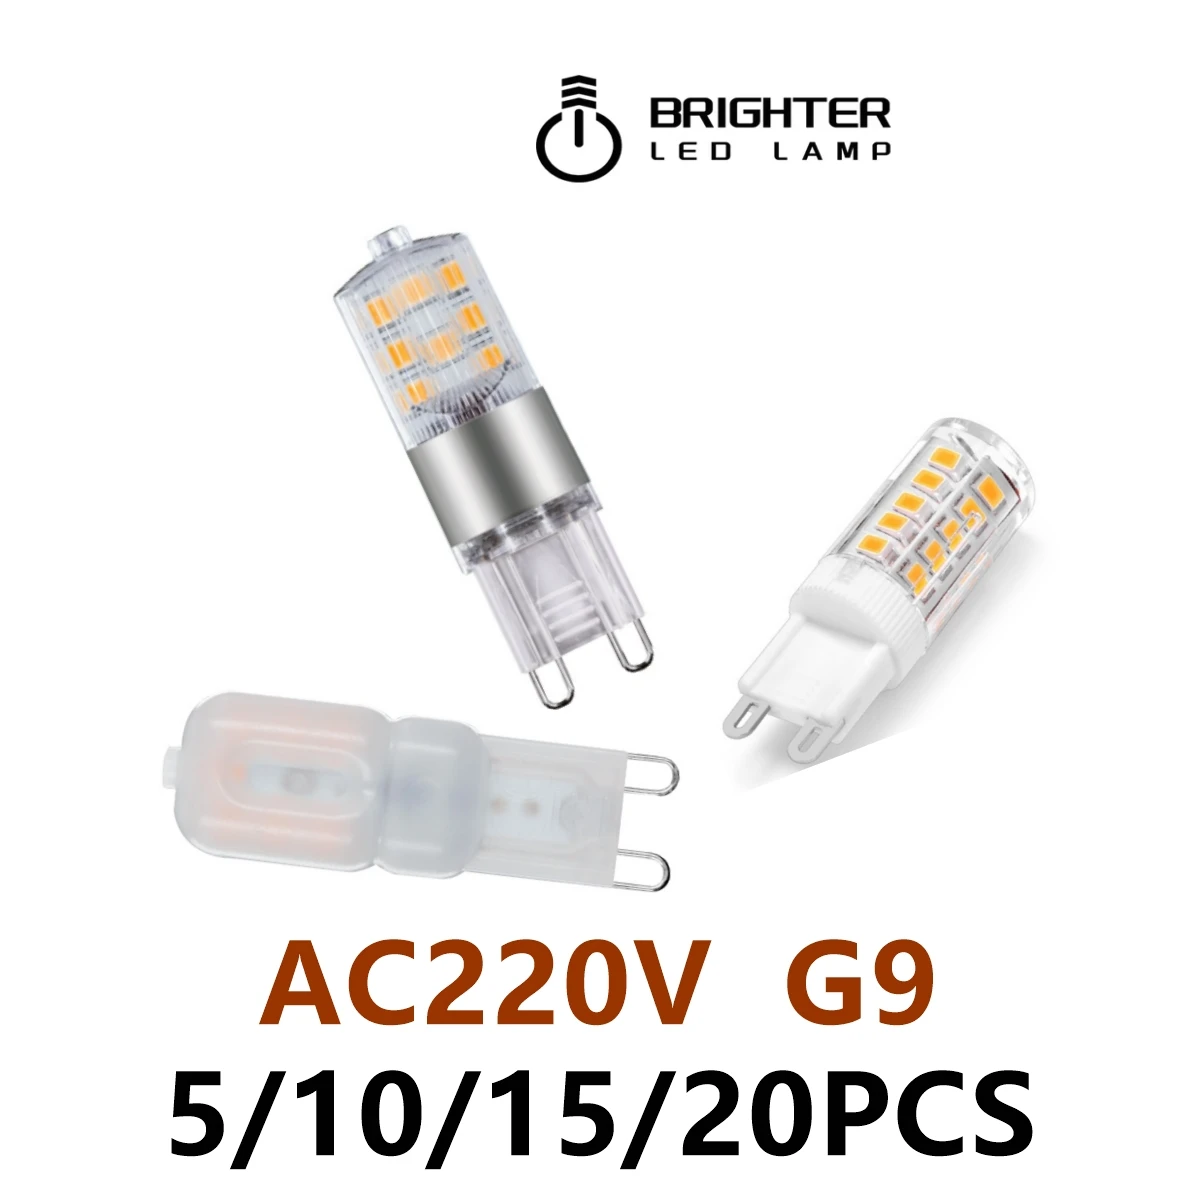 

5-20pcs new product LED Mini G9 Corn Light AC220V 3W super bright non-strobe warm white light can replace 20W 50W halogen lamp